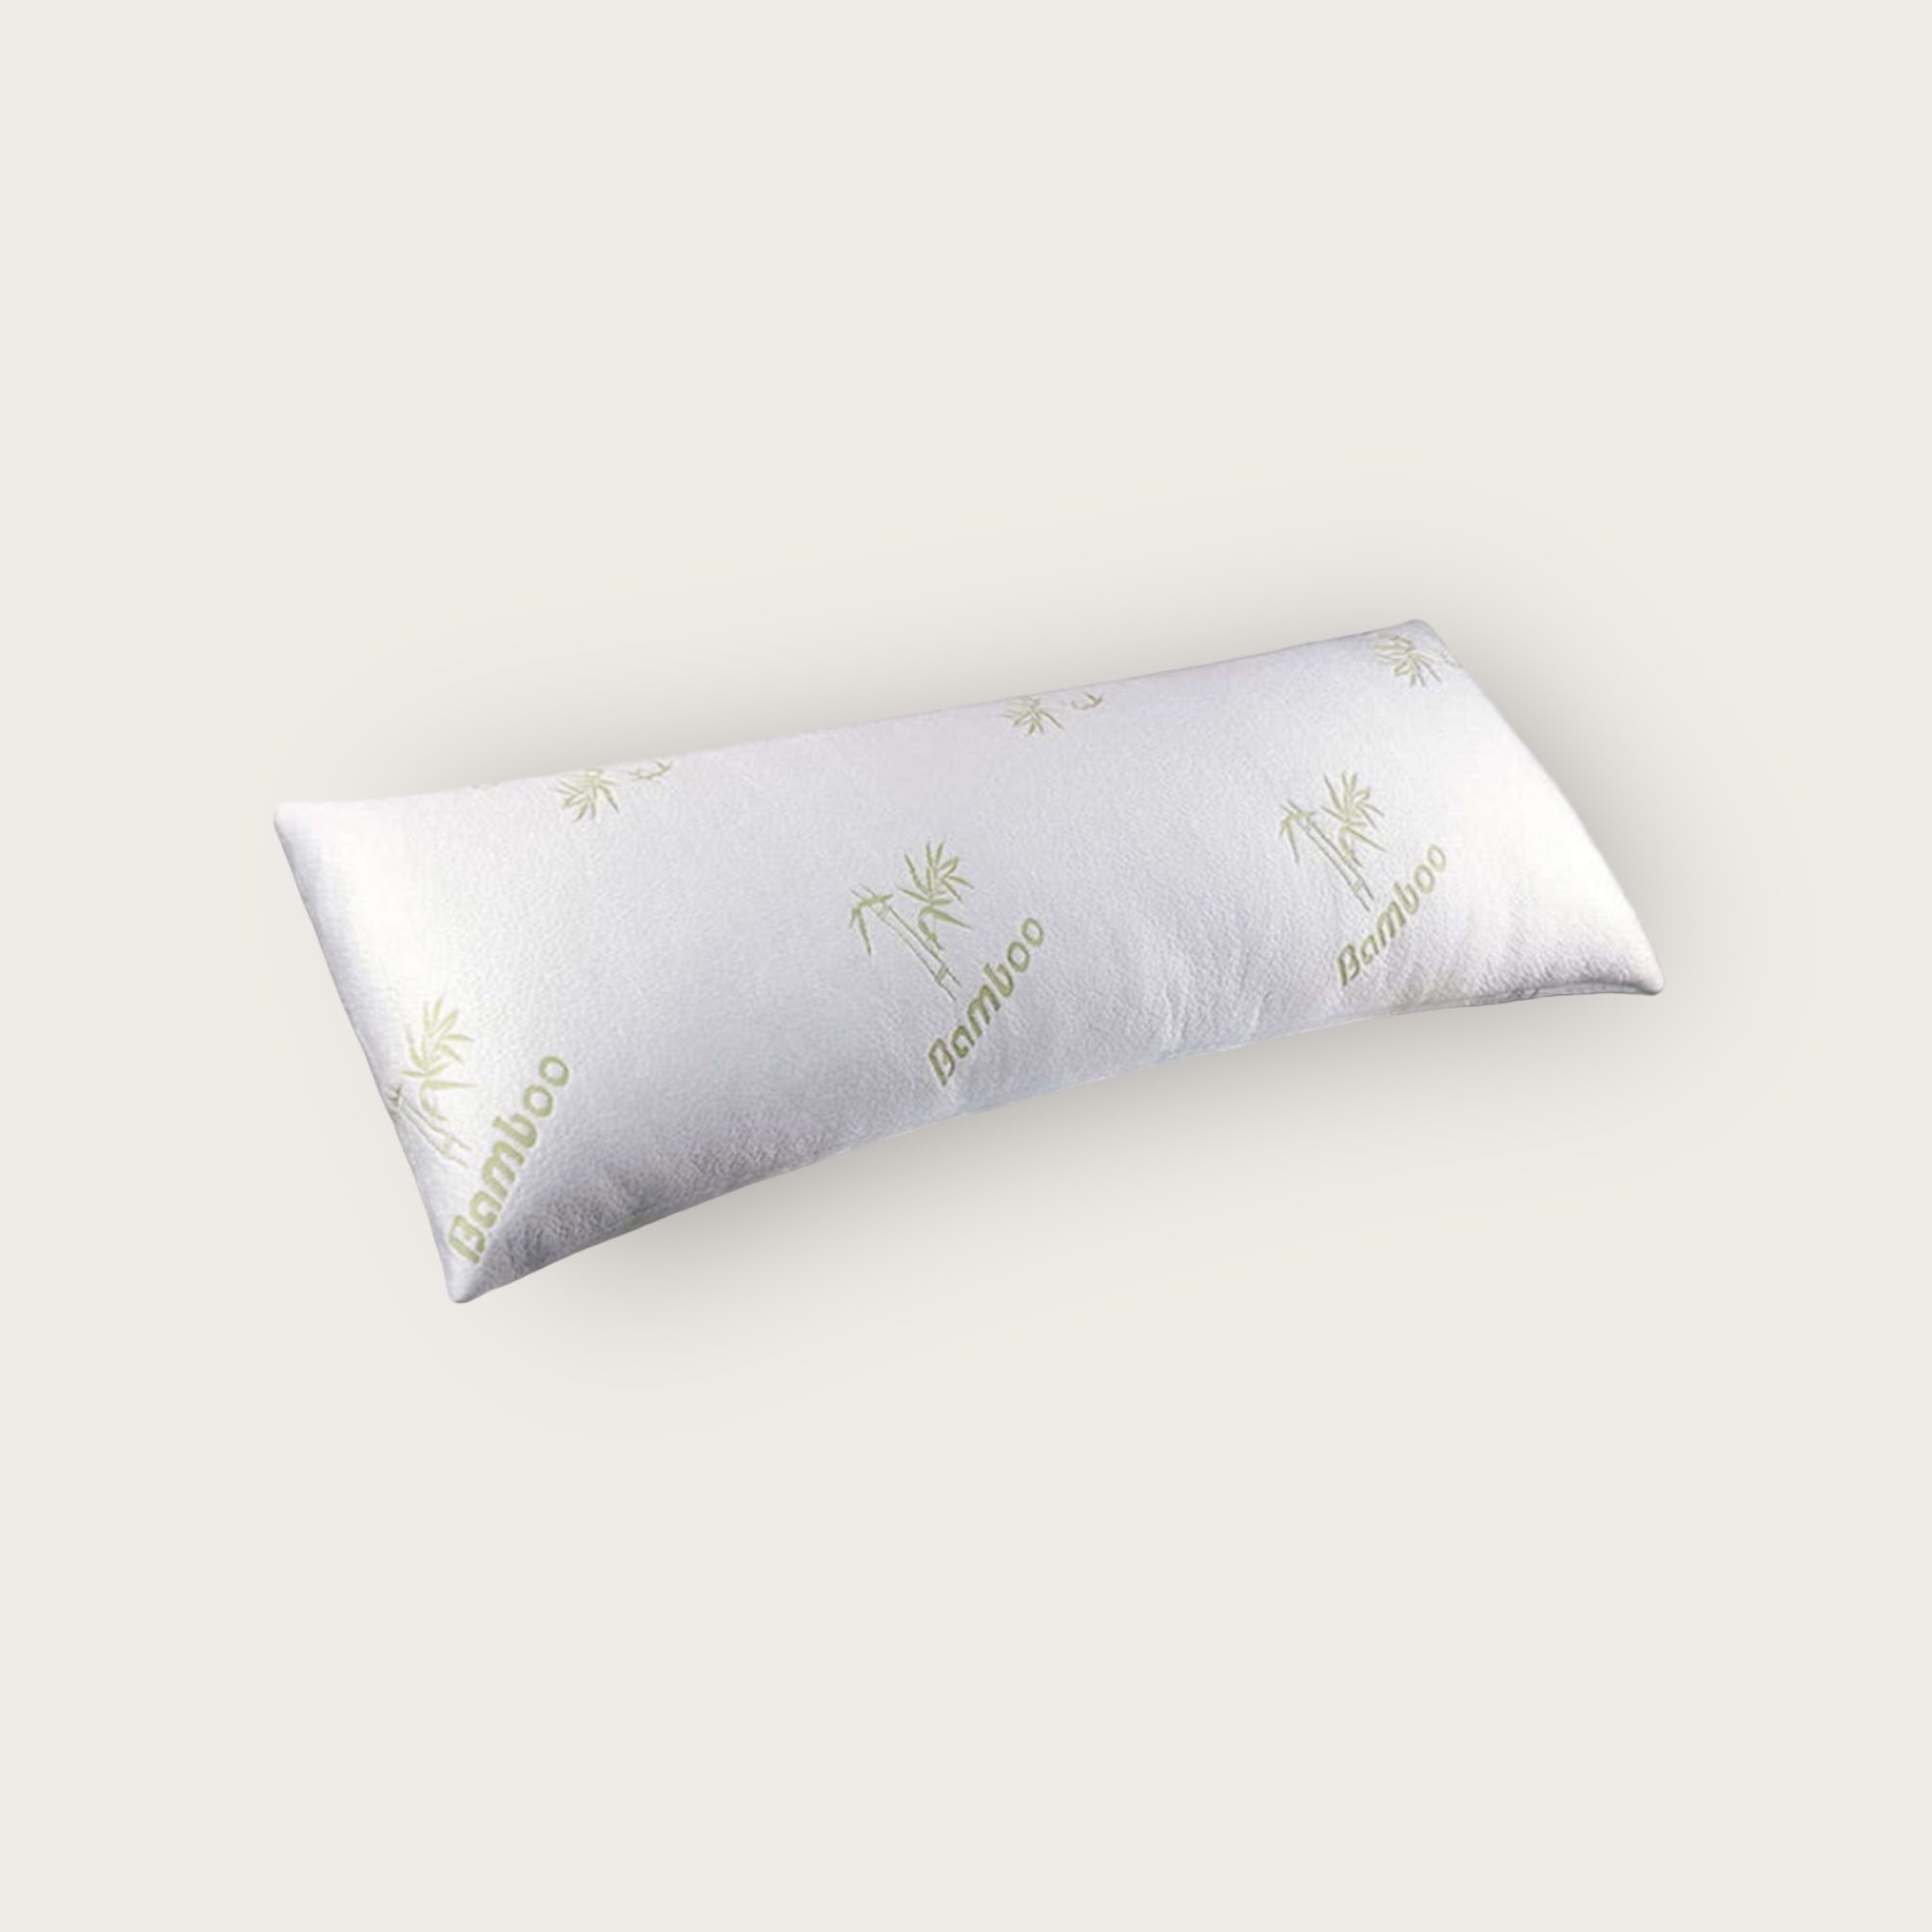 Billede af 150cm, Luksus Body Pillow med Bambus Cover og Memory Foam